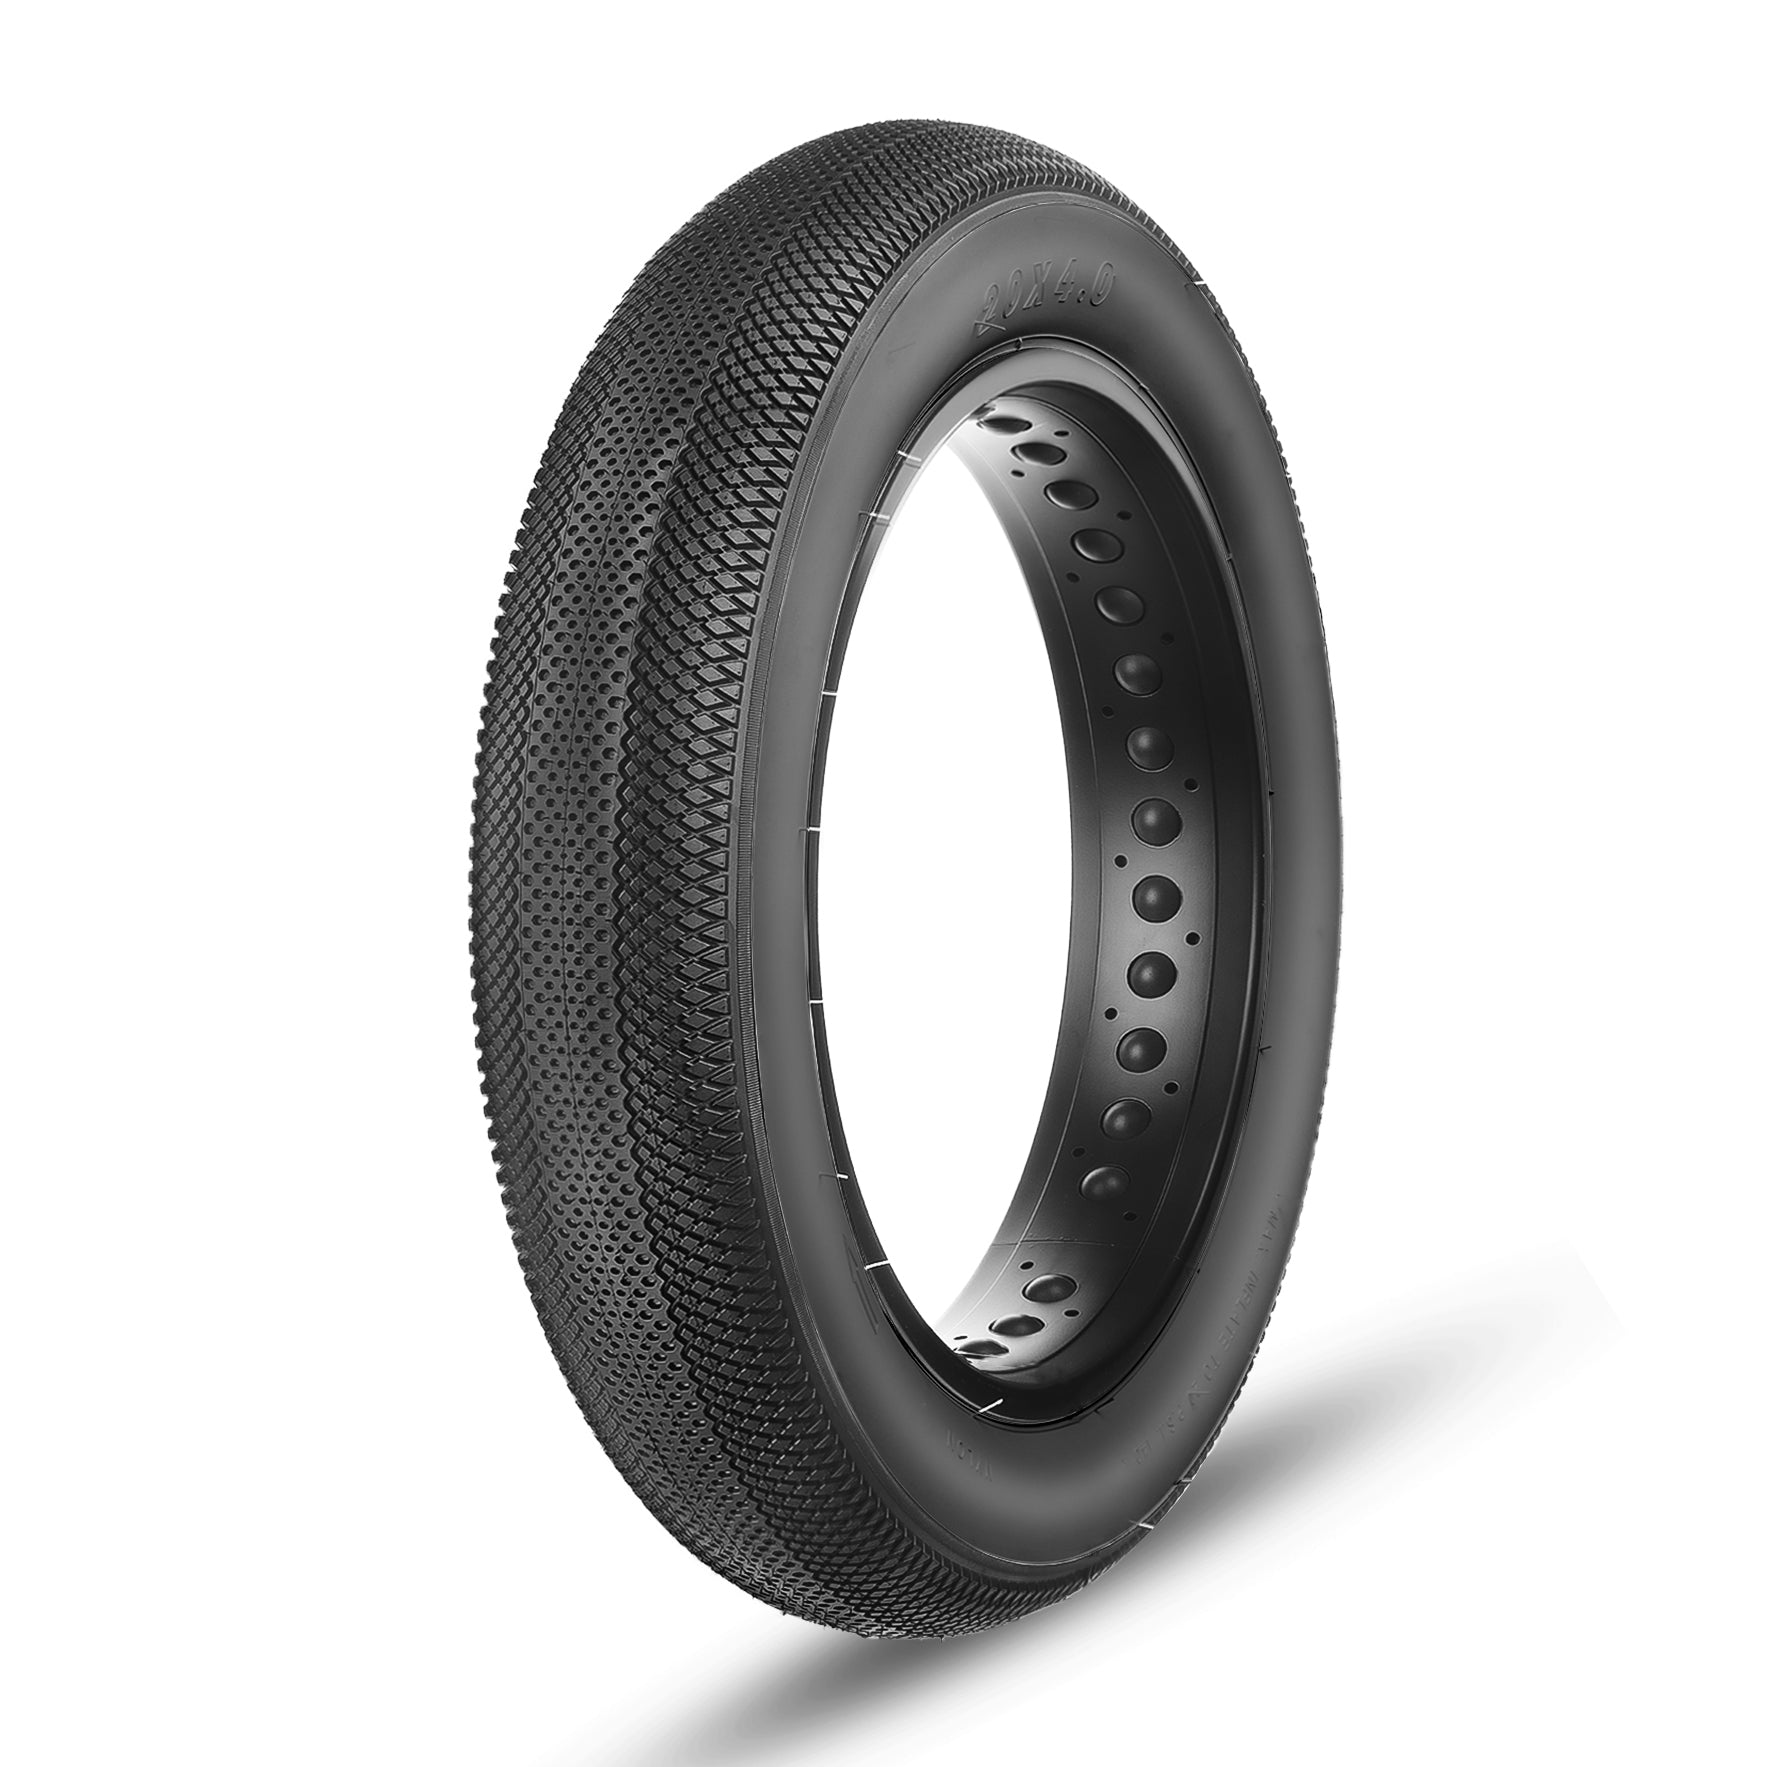 Hycline Electric Bike Fat Tire - 20/24/26×4.0 Inch